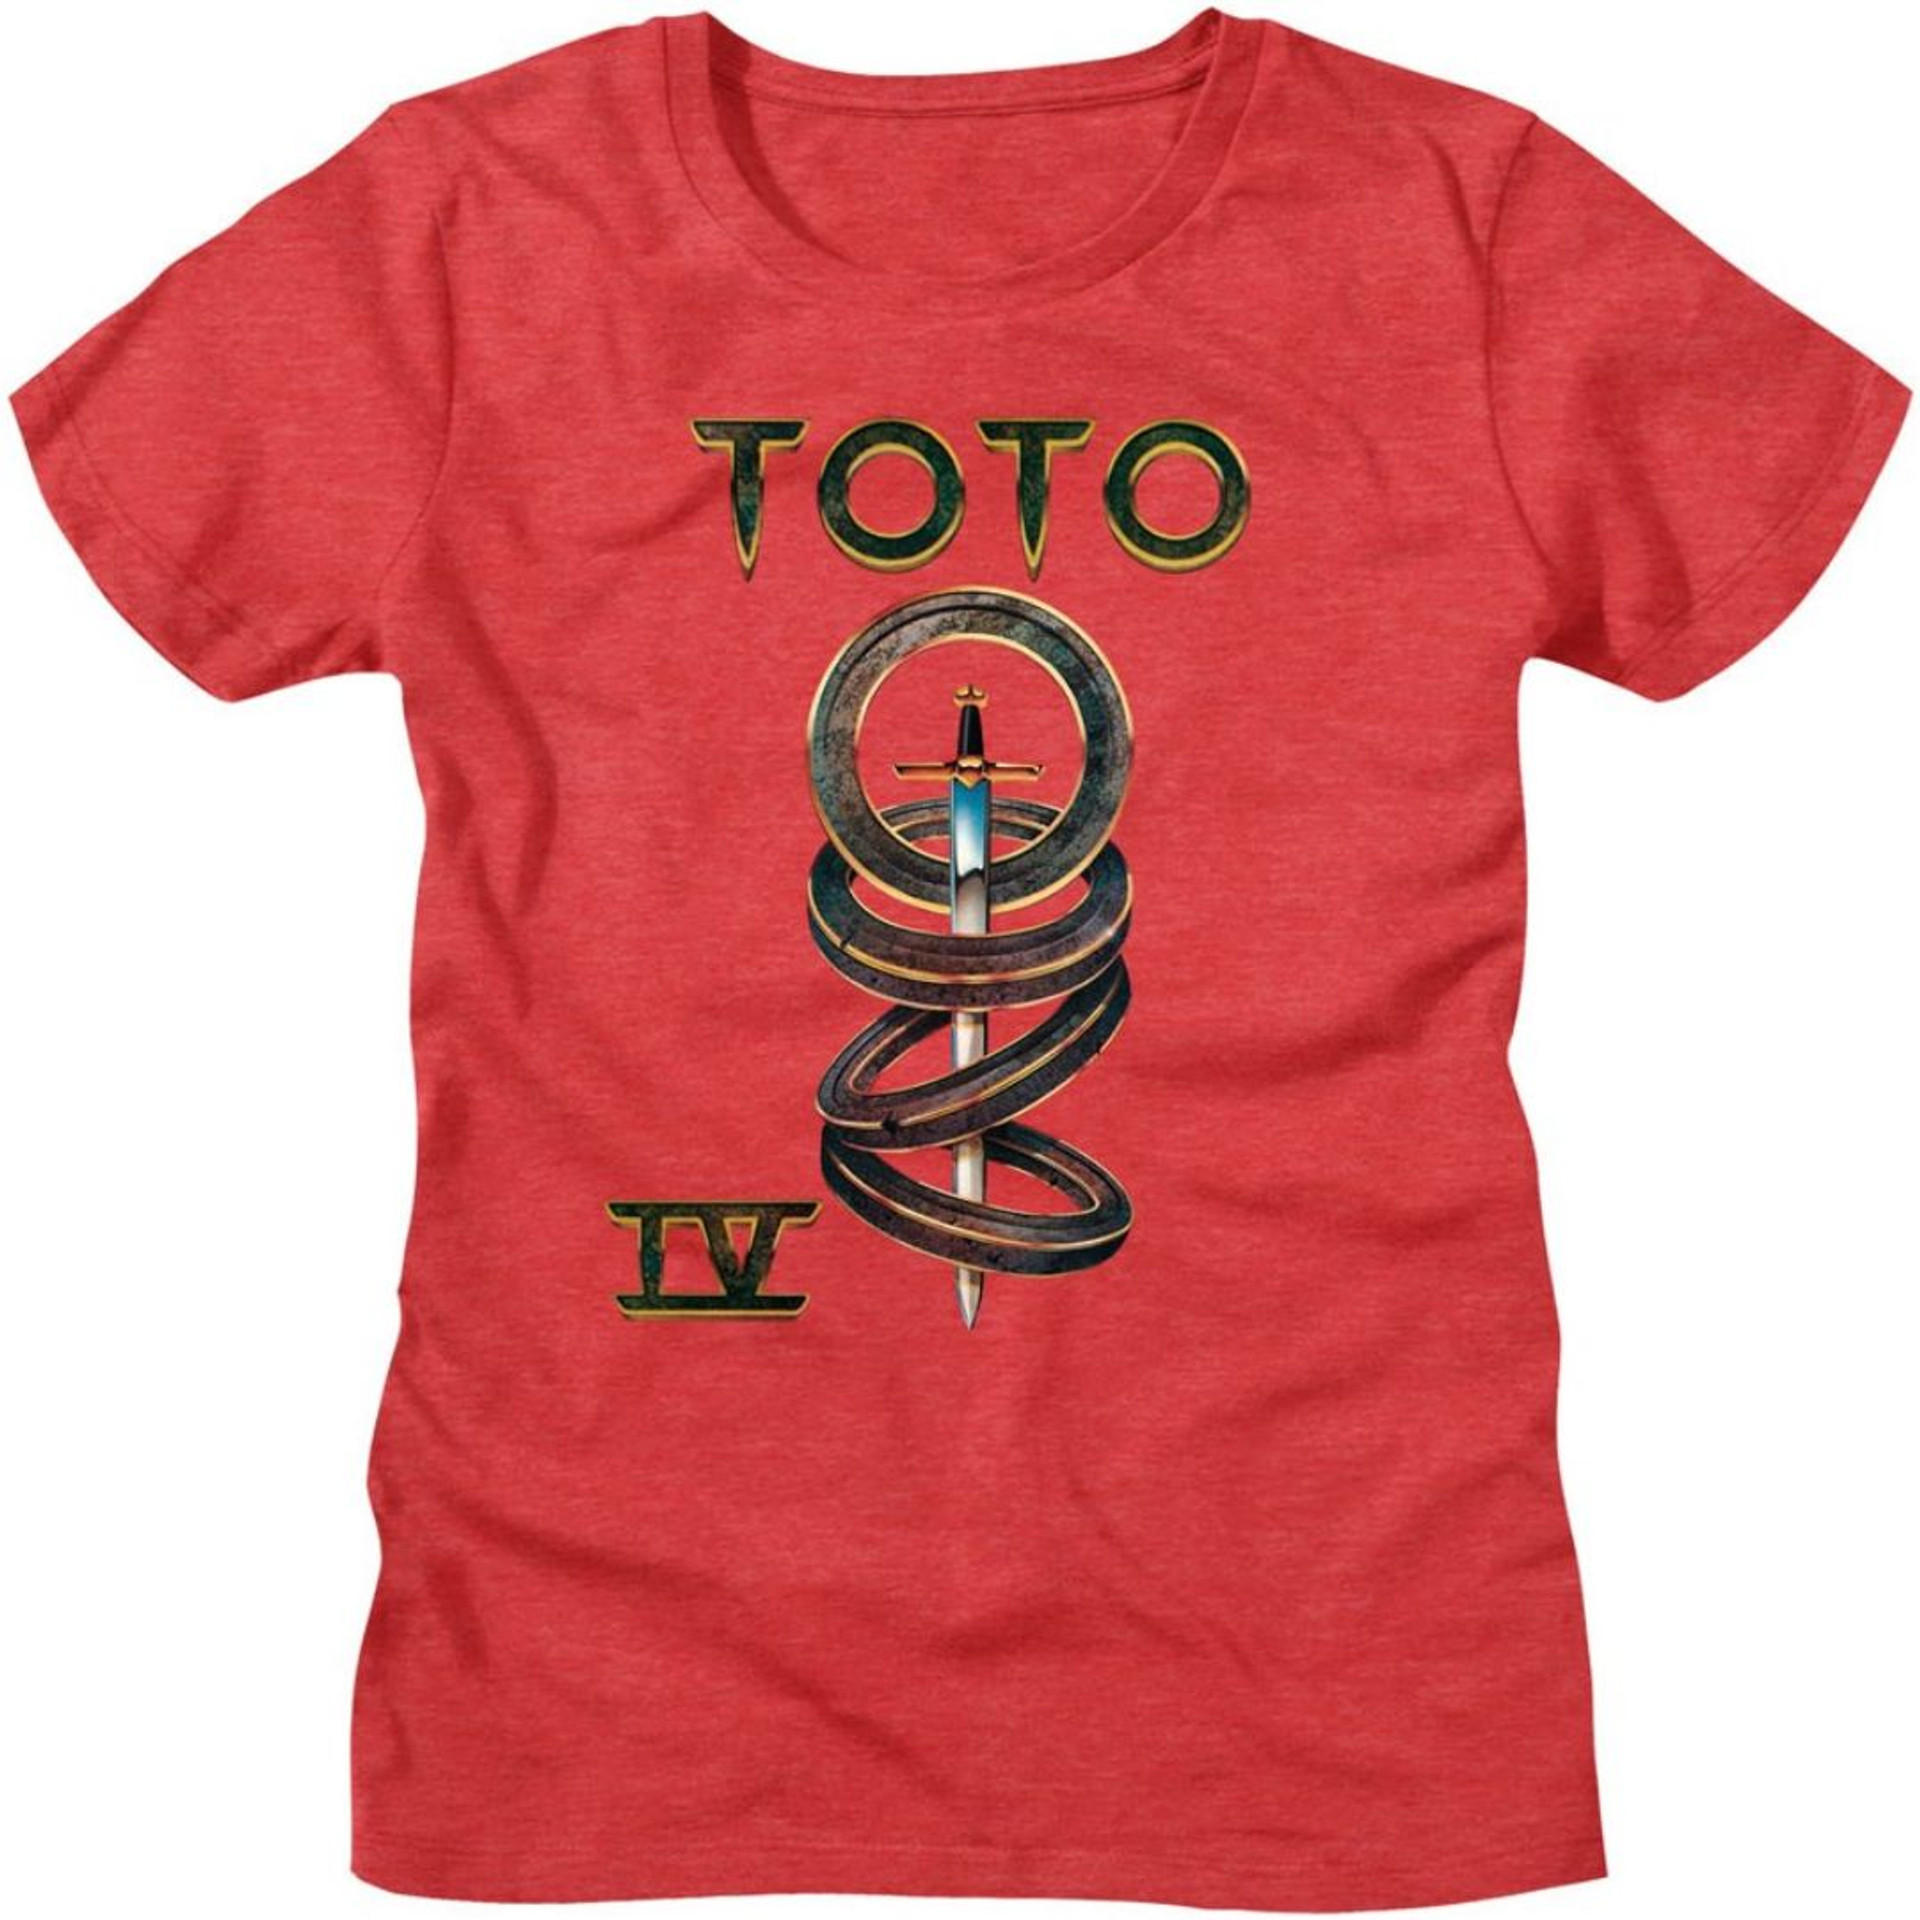 Toto IV (Four) Album Cover Artwork Men's Unisex T-shirt